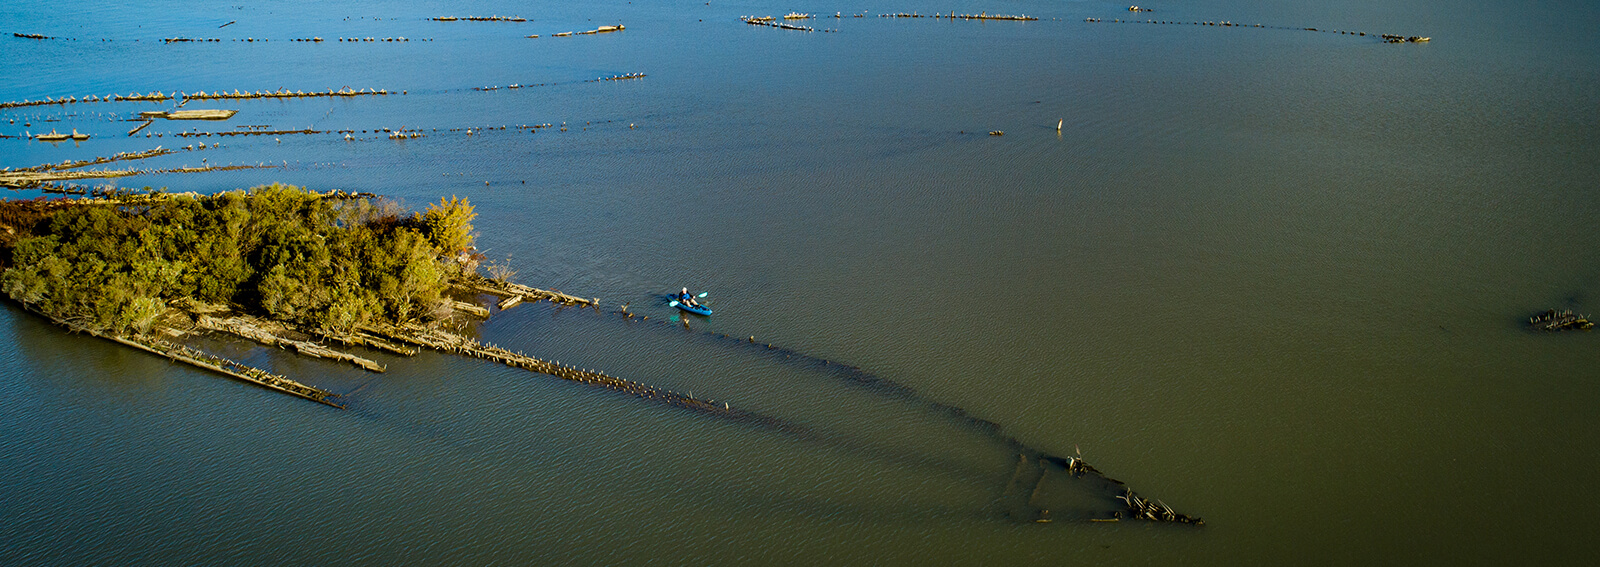 a kayaker paddles next to a a shipwreck